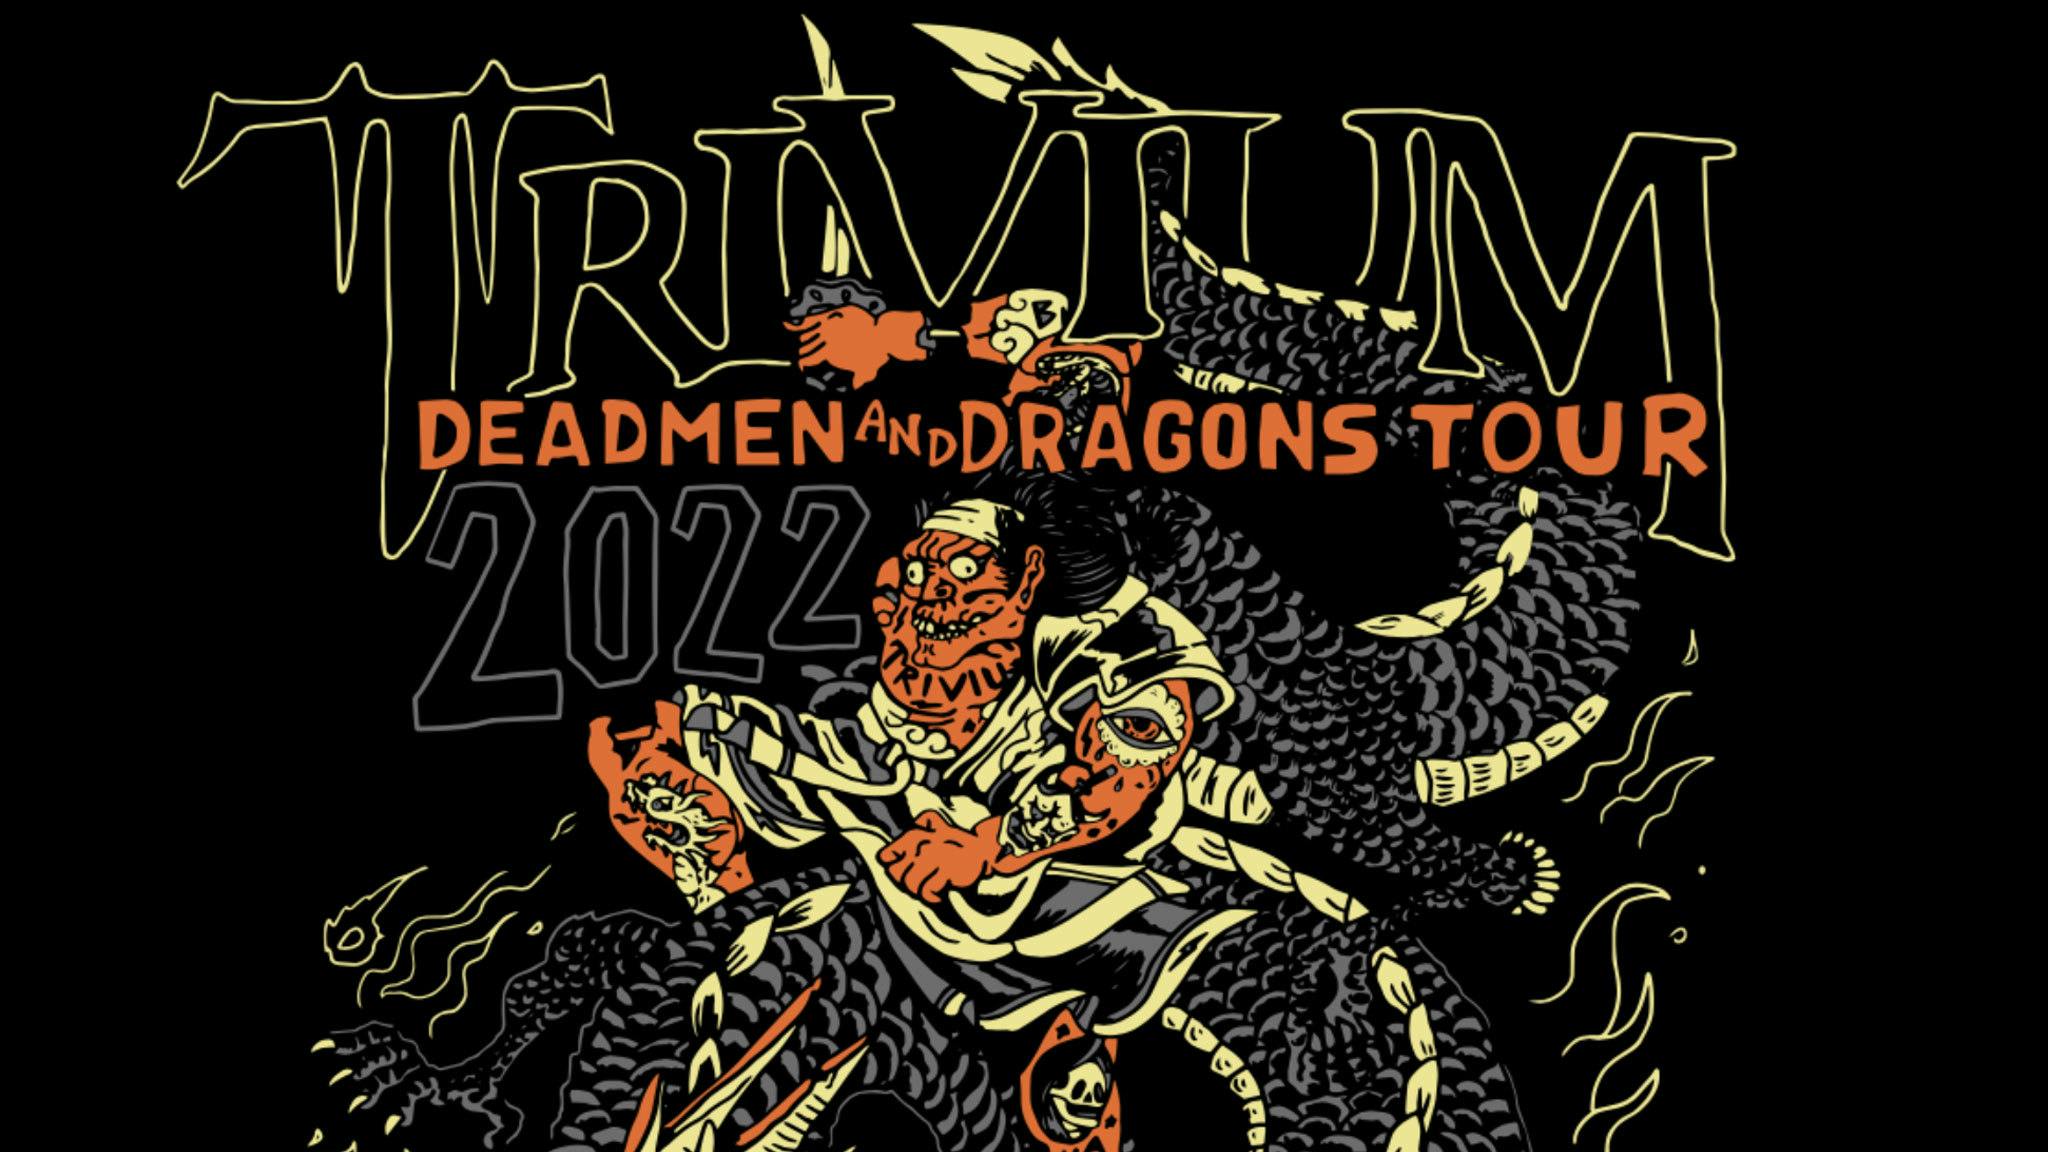 Trivium announce Deadmen And Dragons U.S. tour